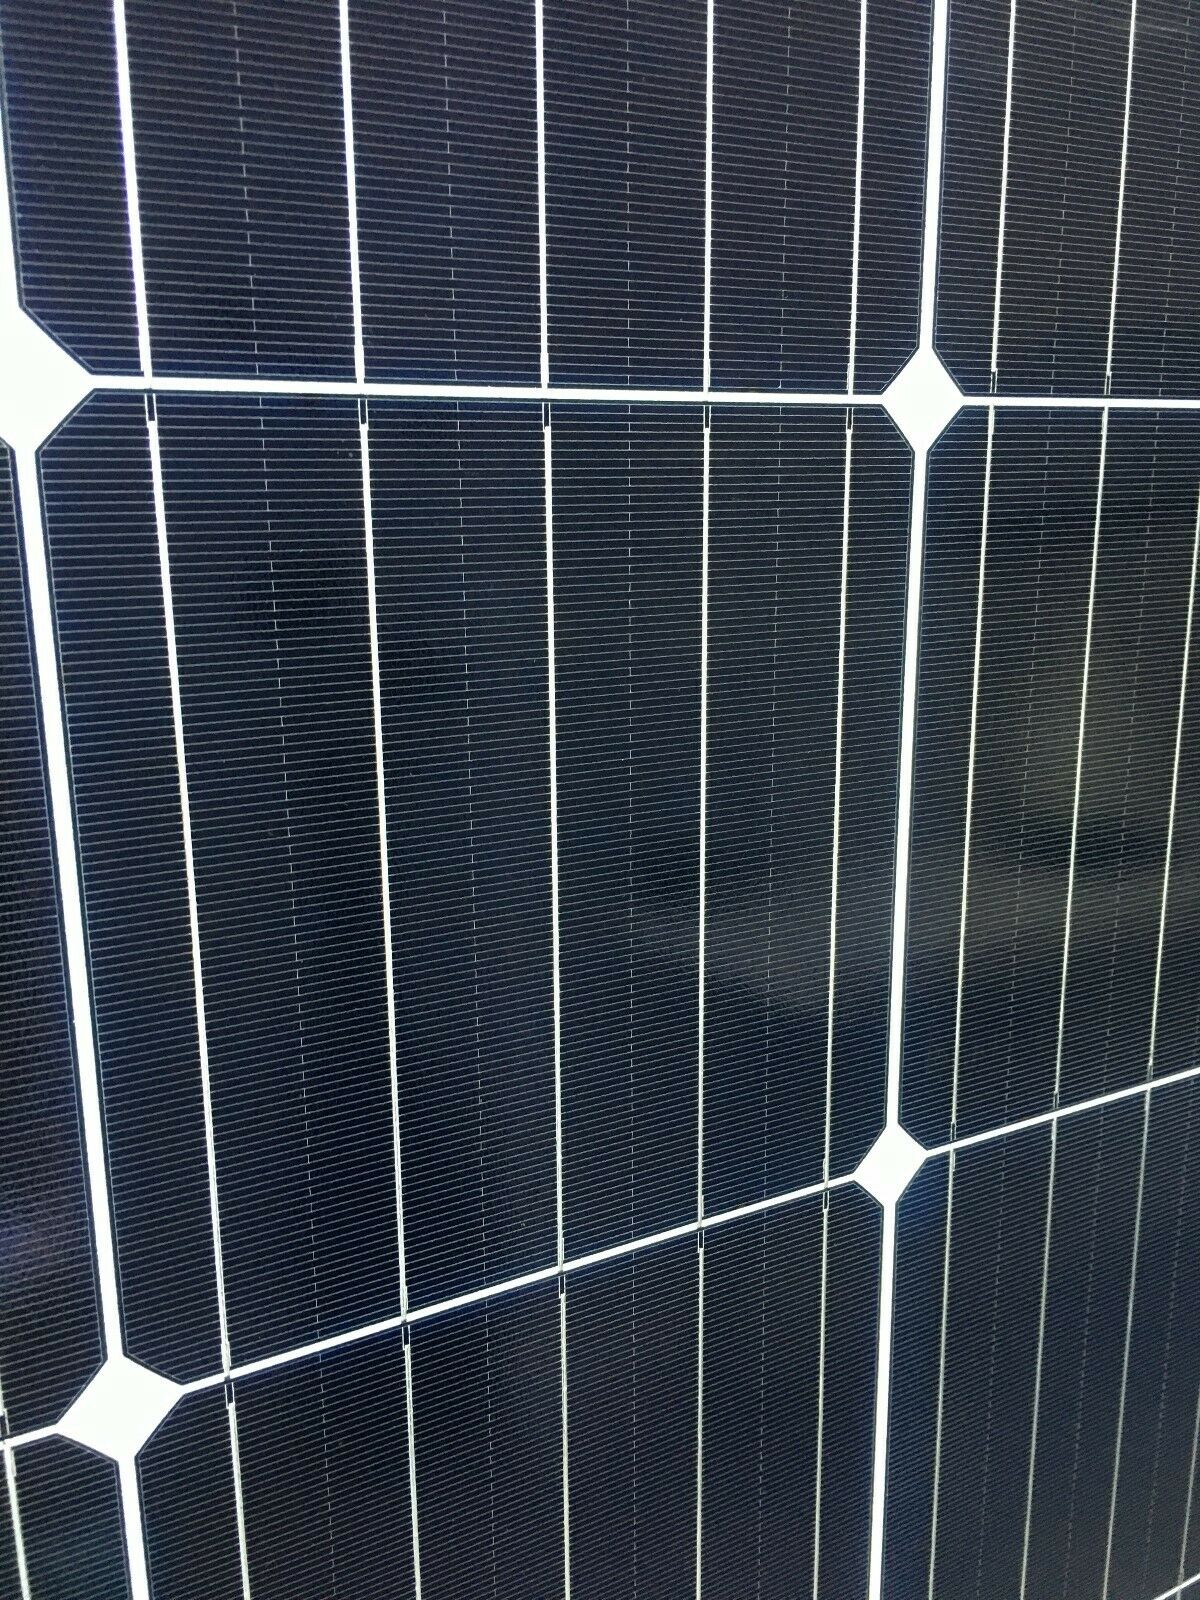 Solar Panel 60W for motorhome - The Shopsite